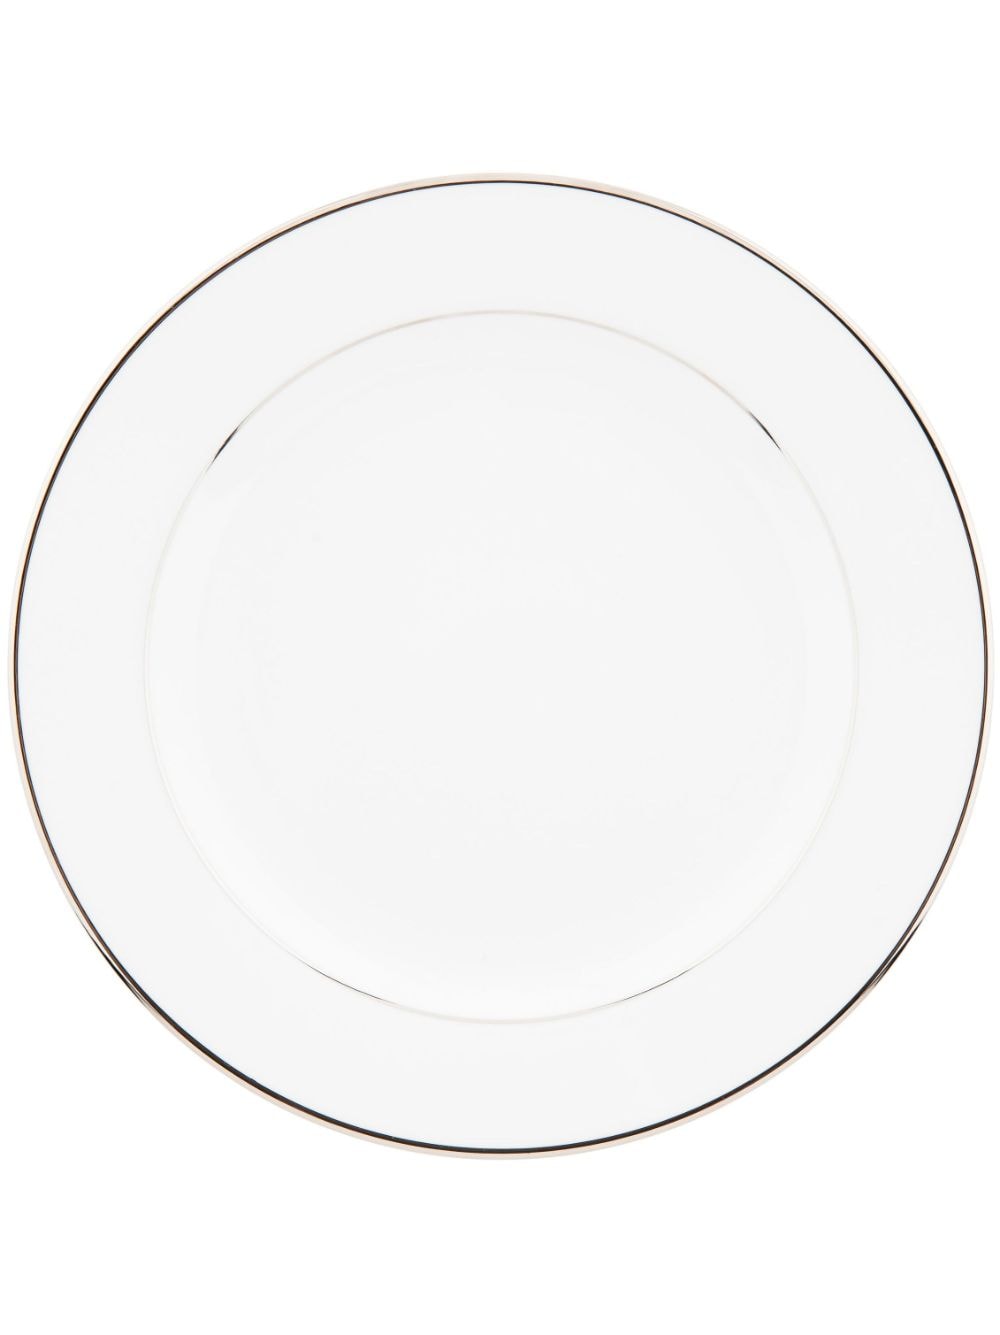 Christofle Albi porcelain dessert plate (21cm) - Silver von Christofle